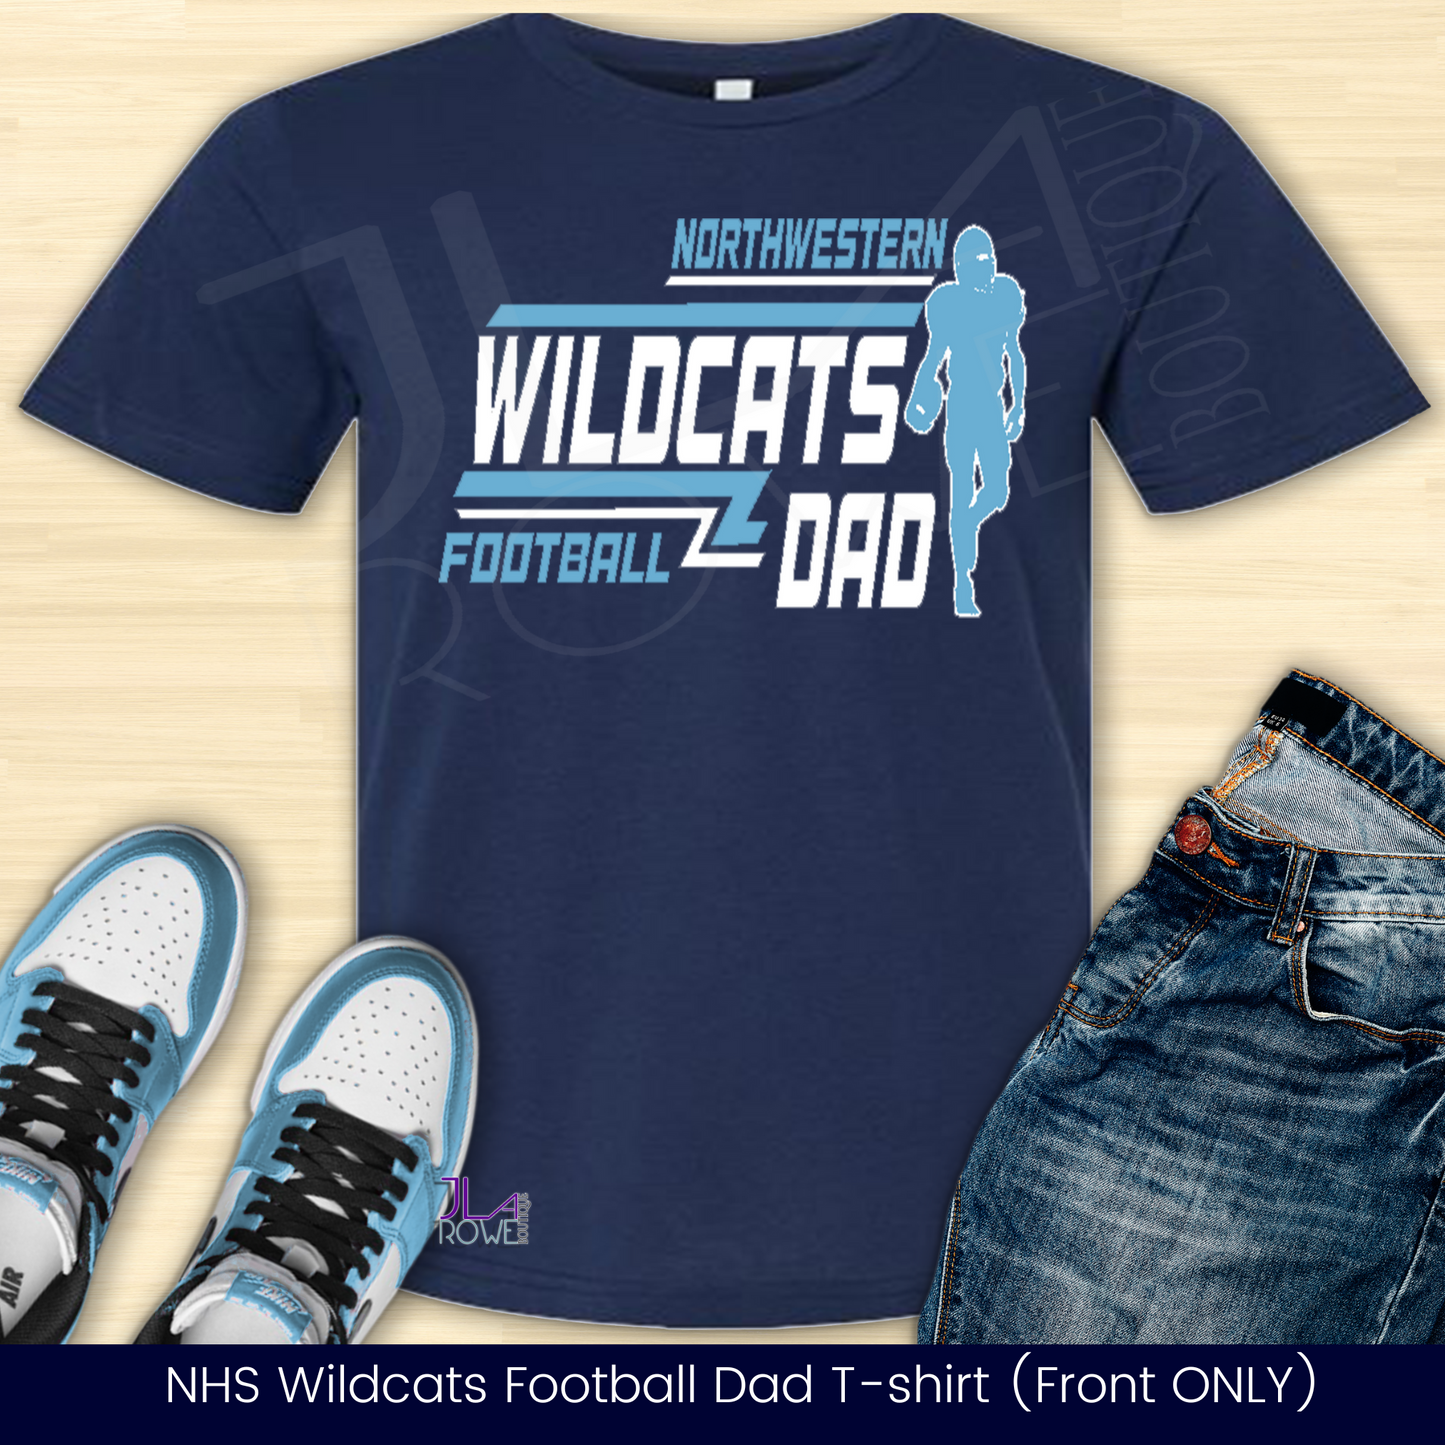 Northwestern: Wildcats Football Mom Center Print Design-904